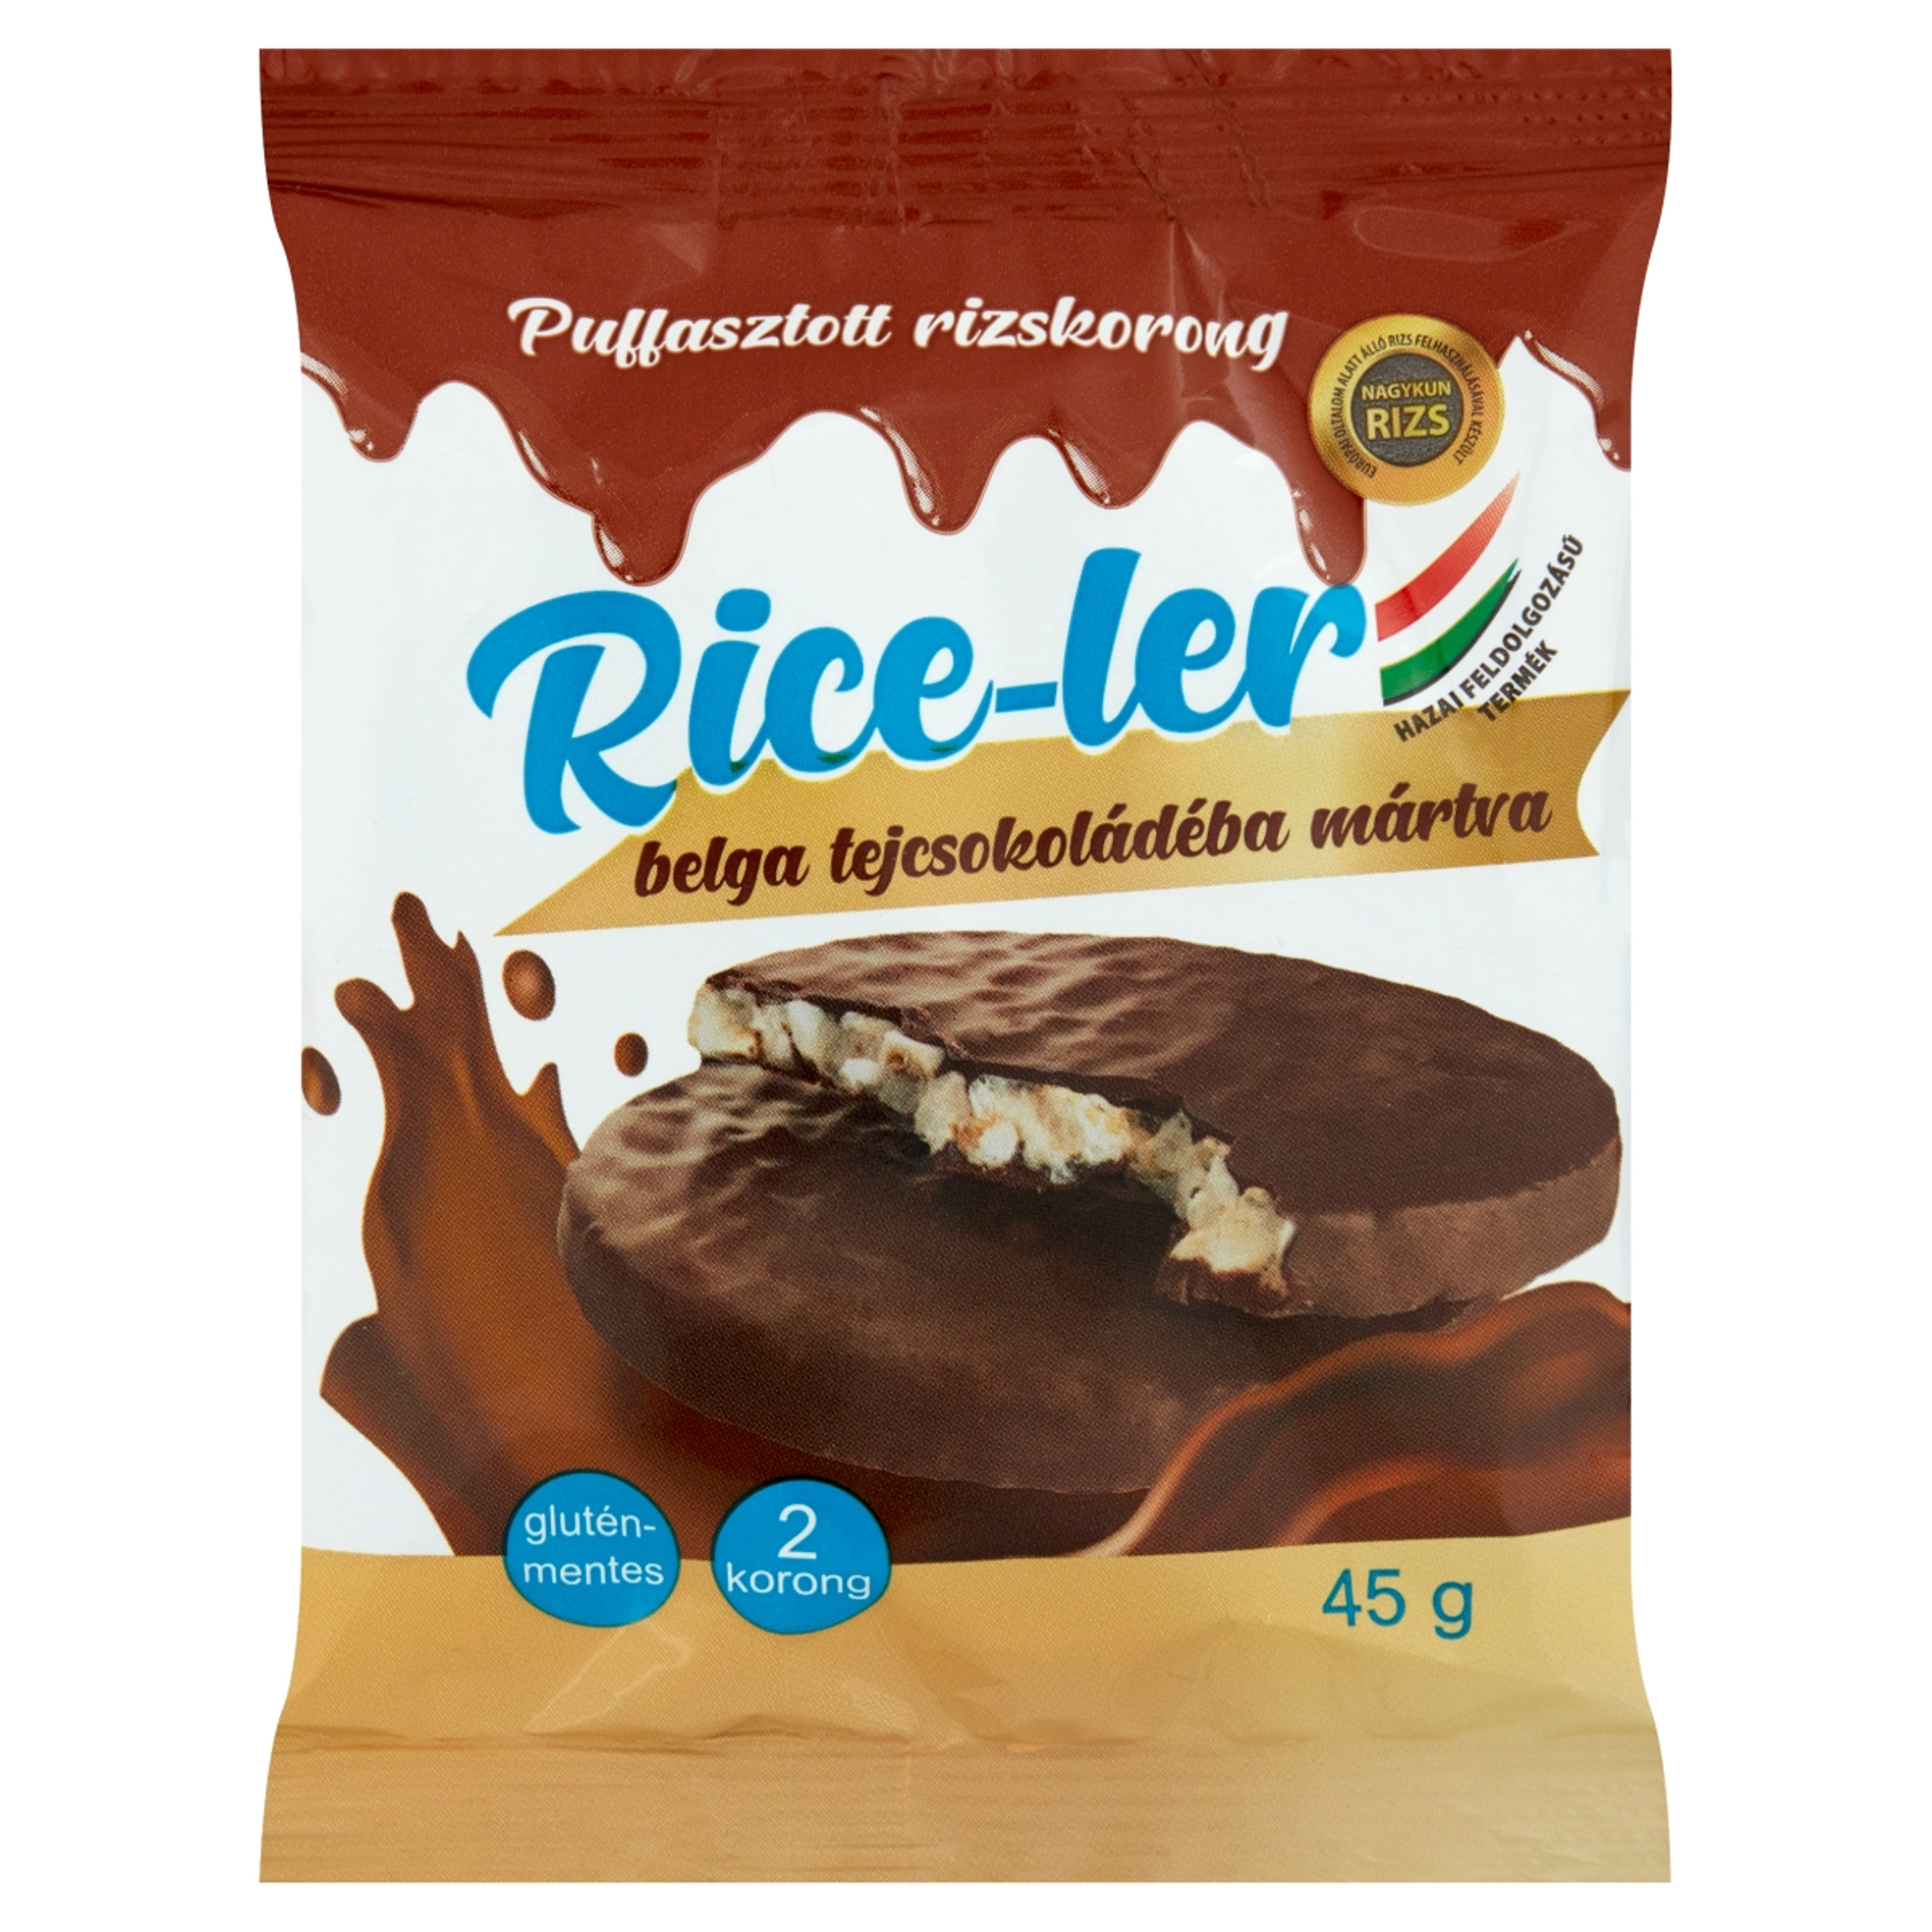 Rice-ler puffasztott rizskorong tejcsokival - 45 g-1